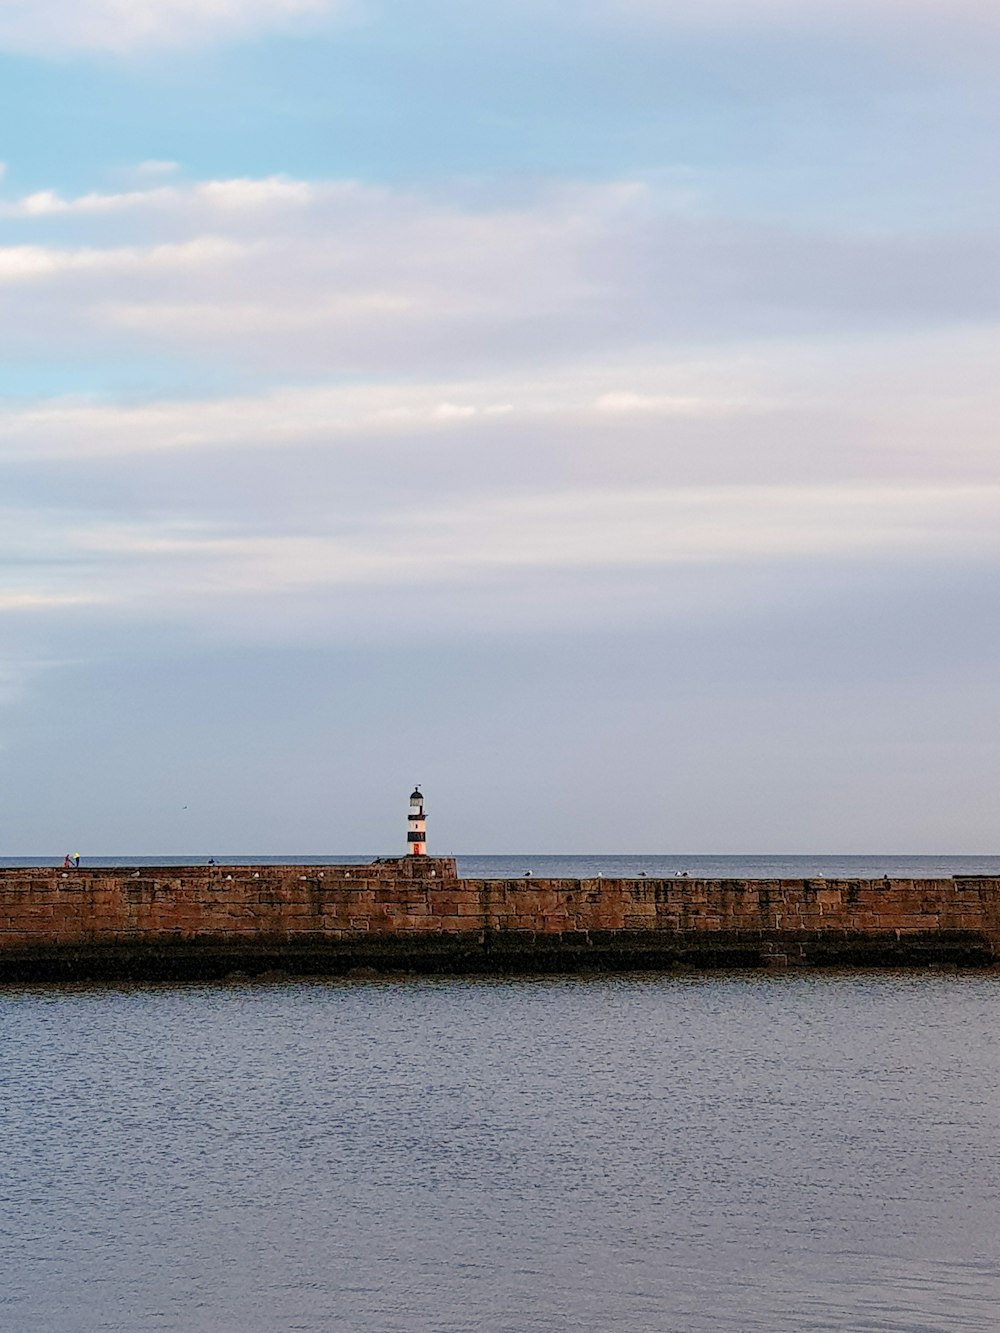 a lighthouse on a pier